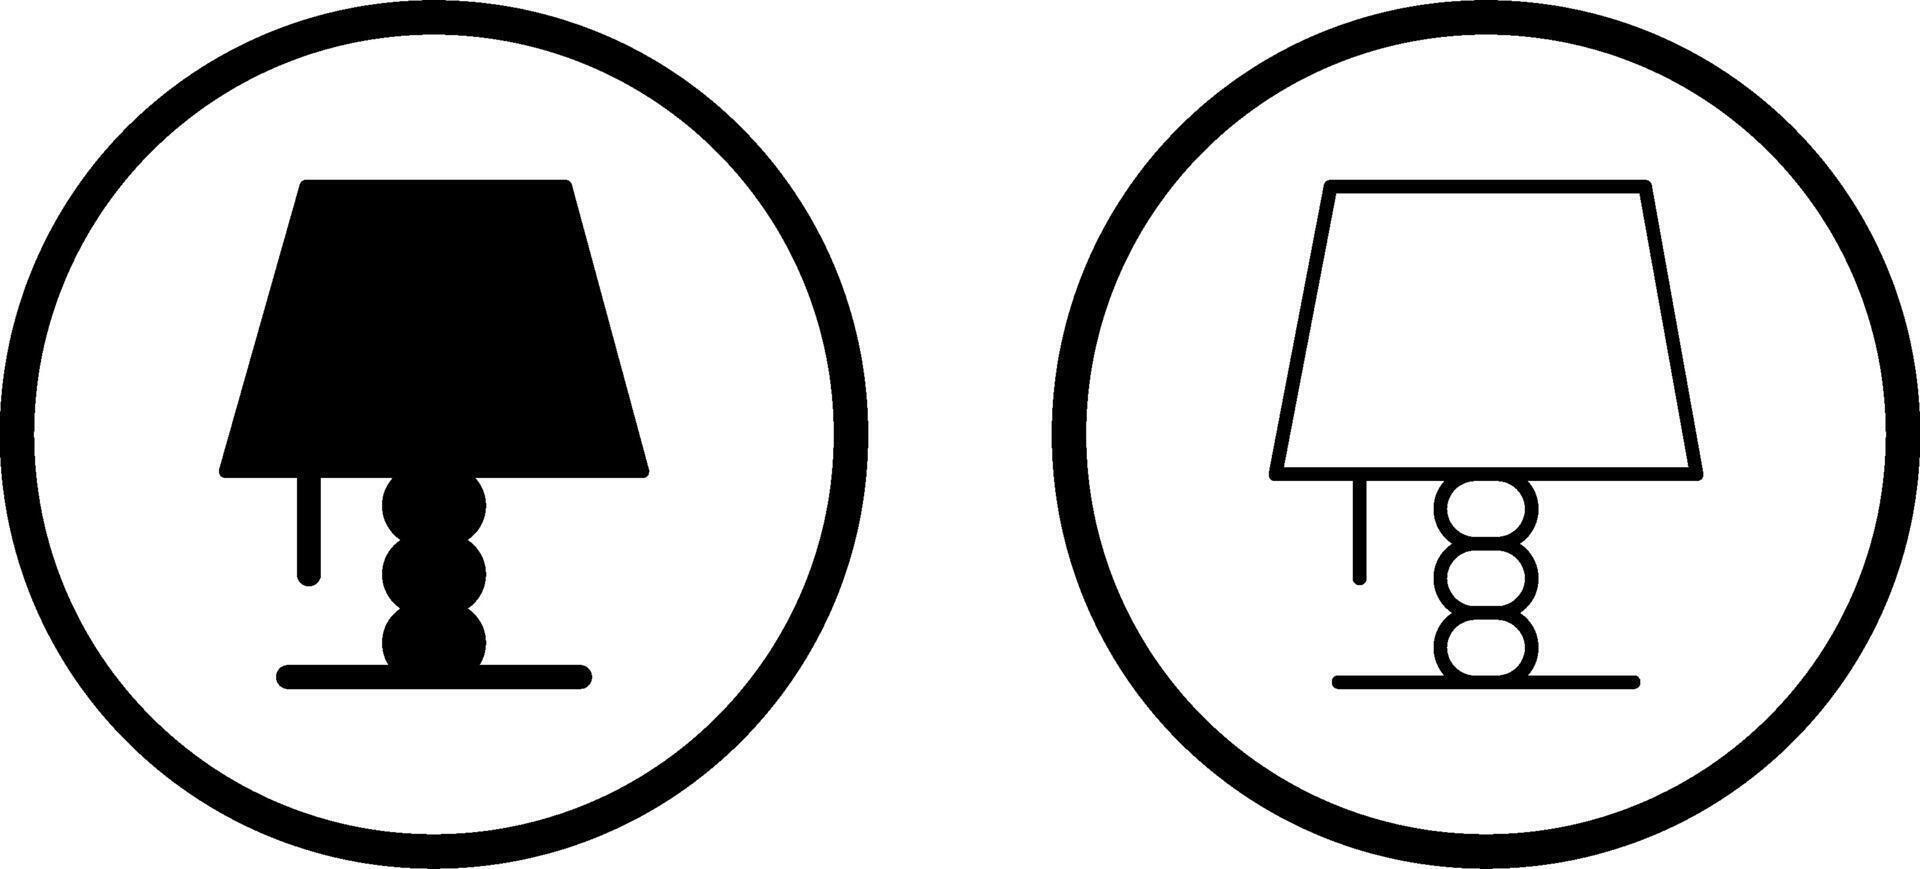 lampada vettore icona